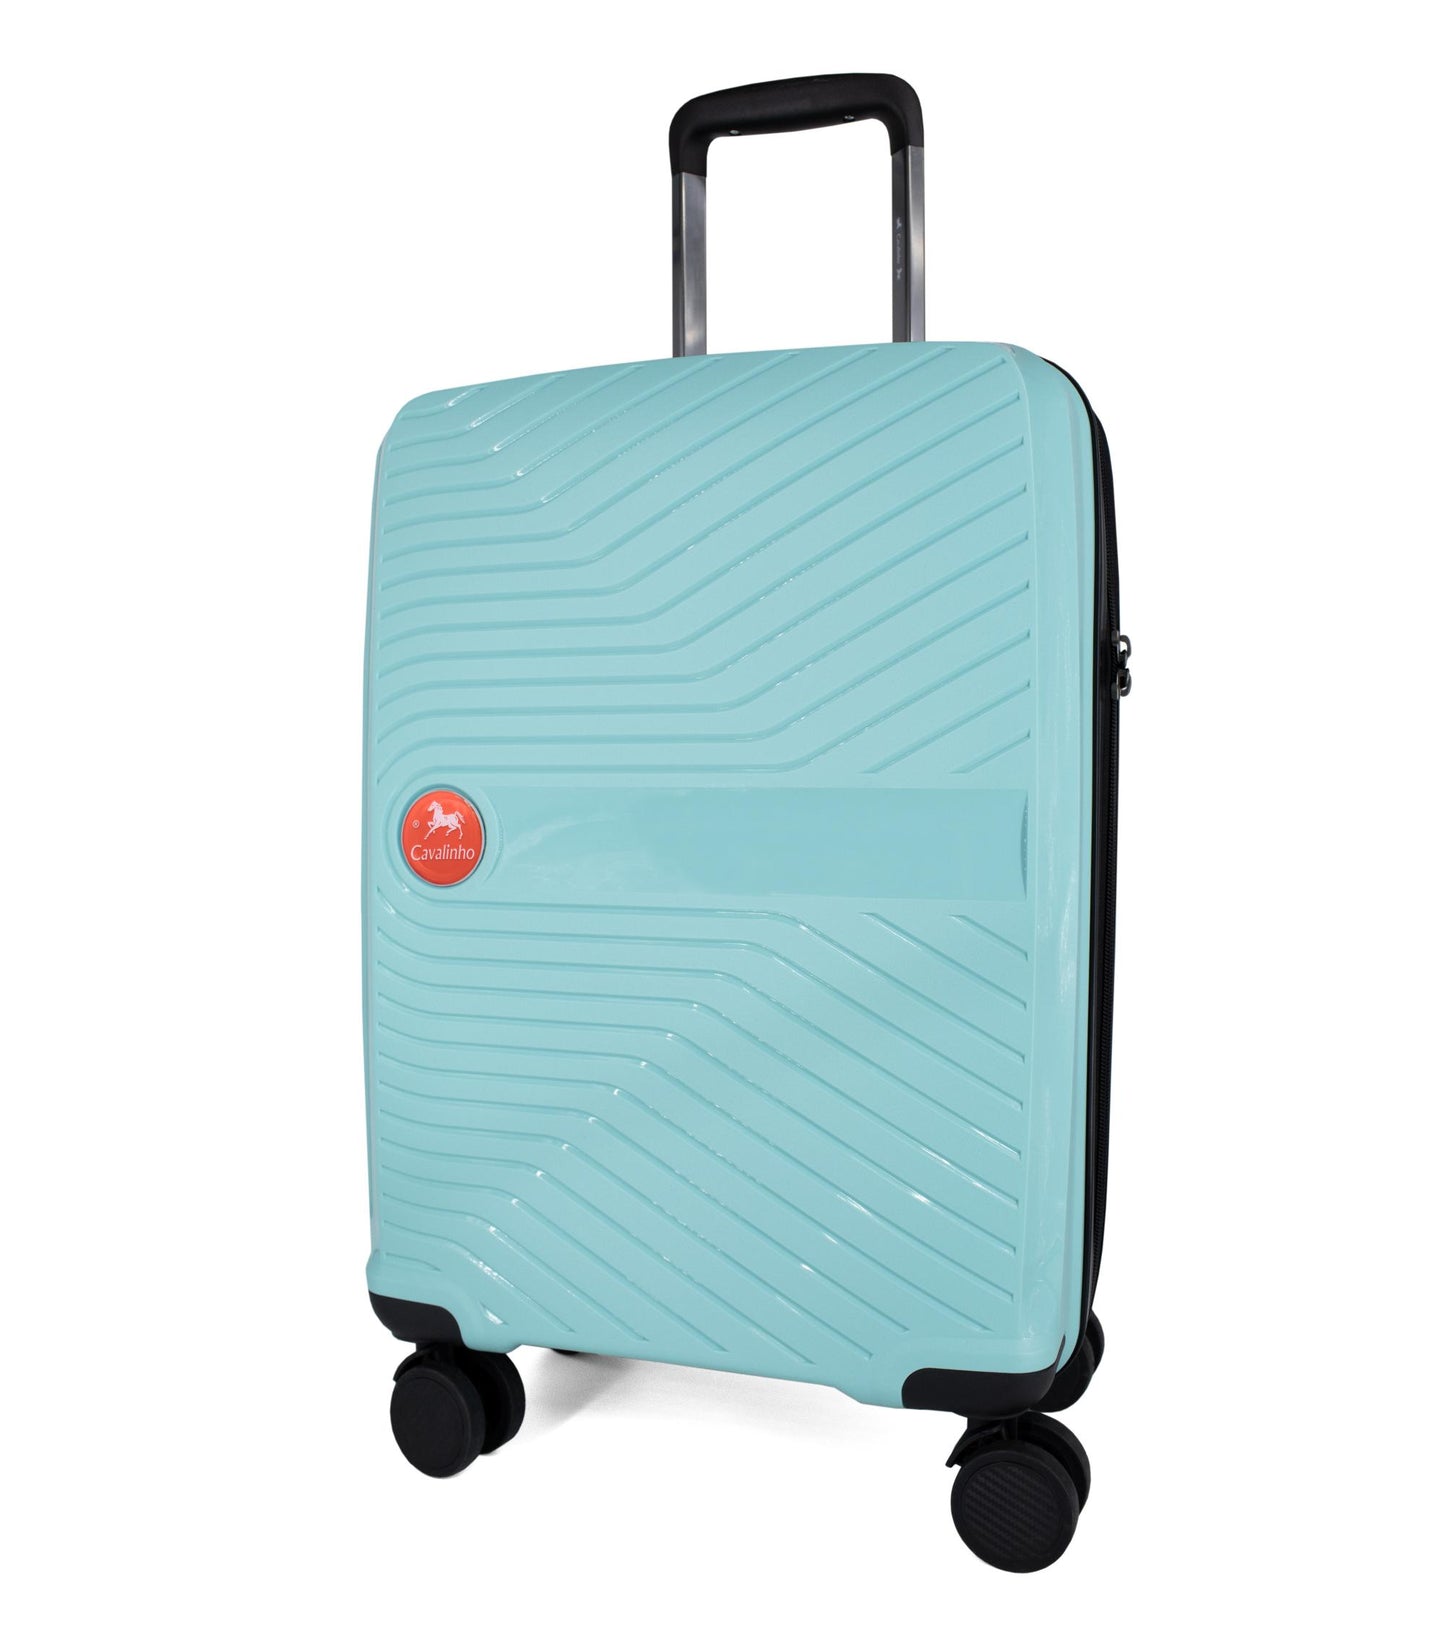 Cavalinho Colorful Carry-on Hardside Luggage (19") - 19 inch LightBlue - 68020004.10.19_2